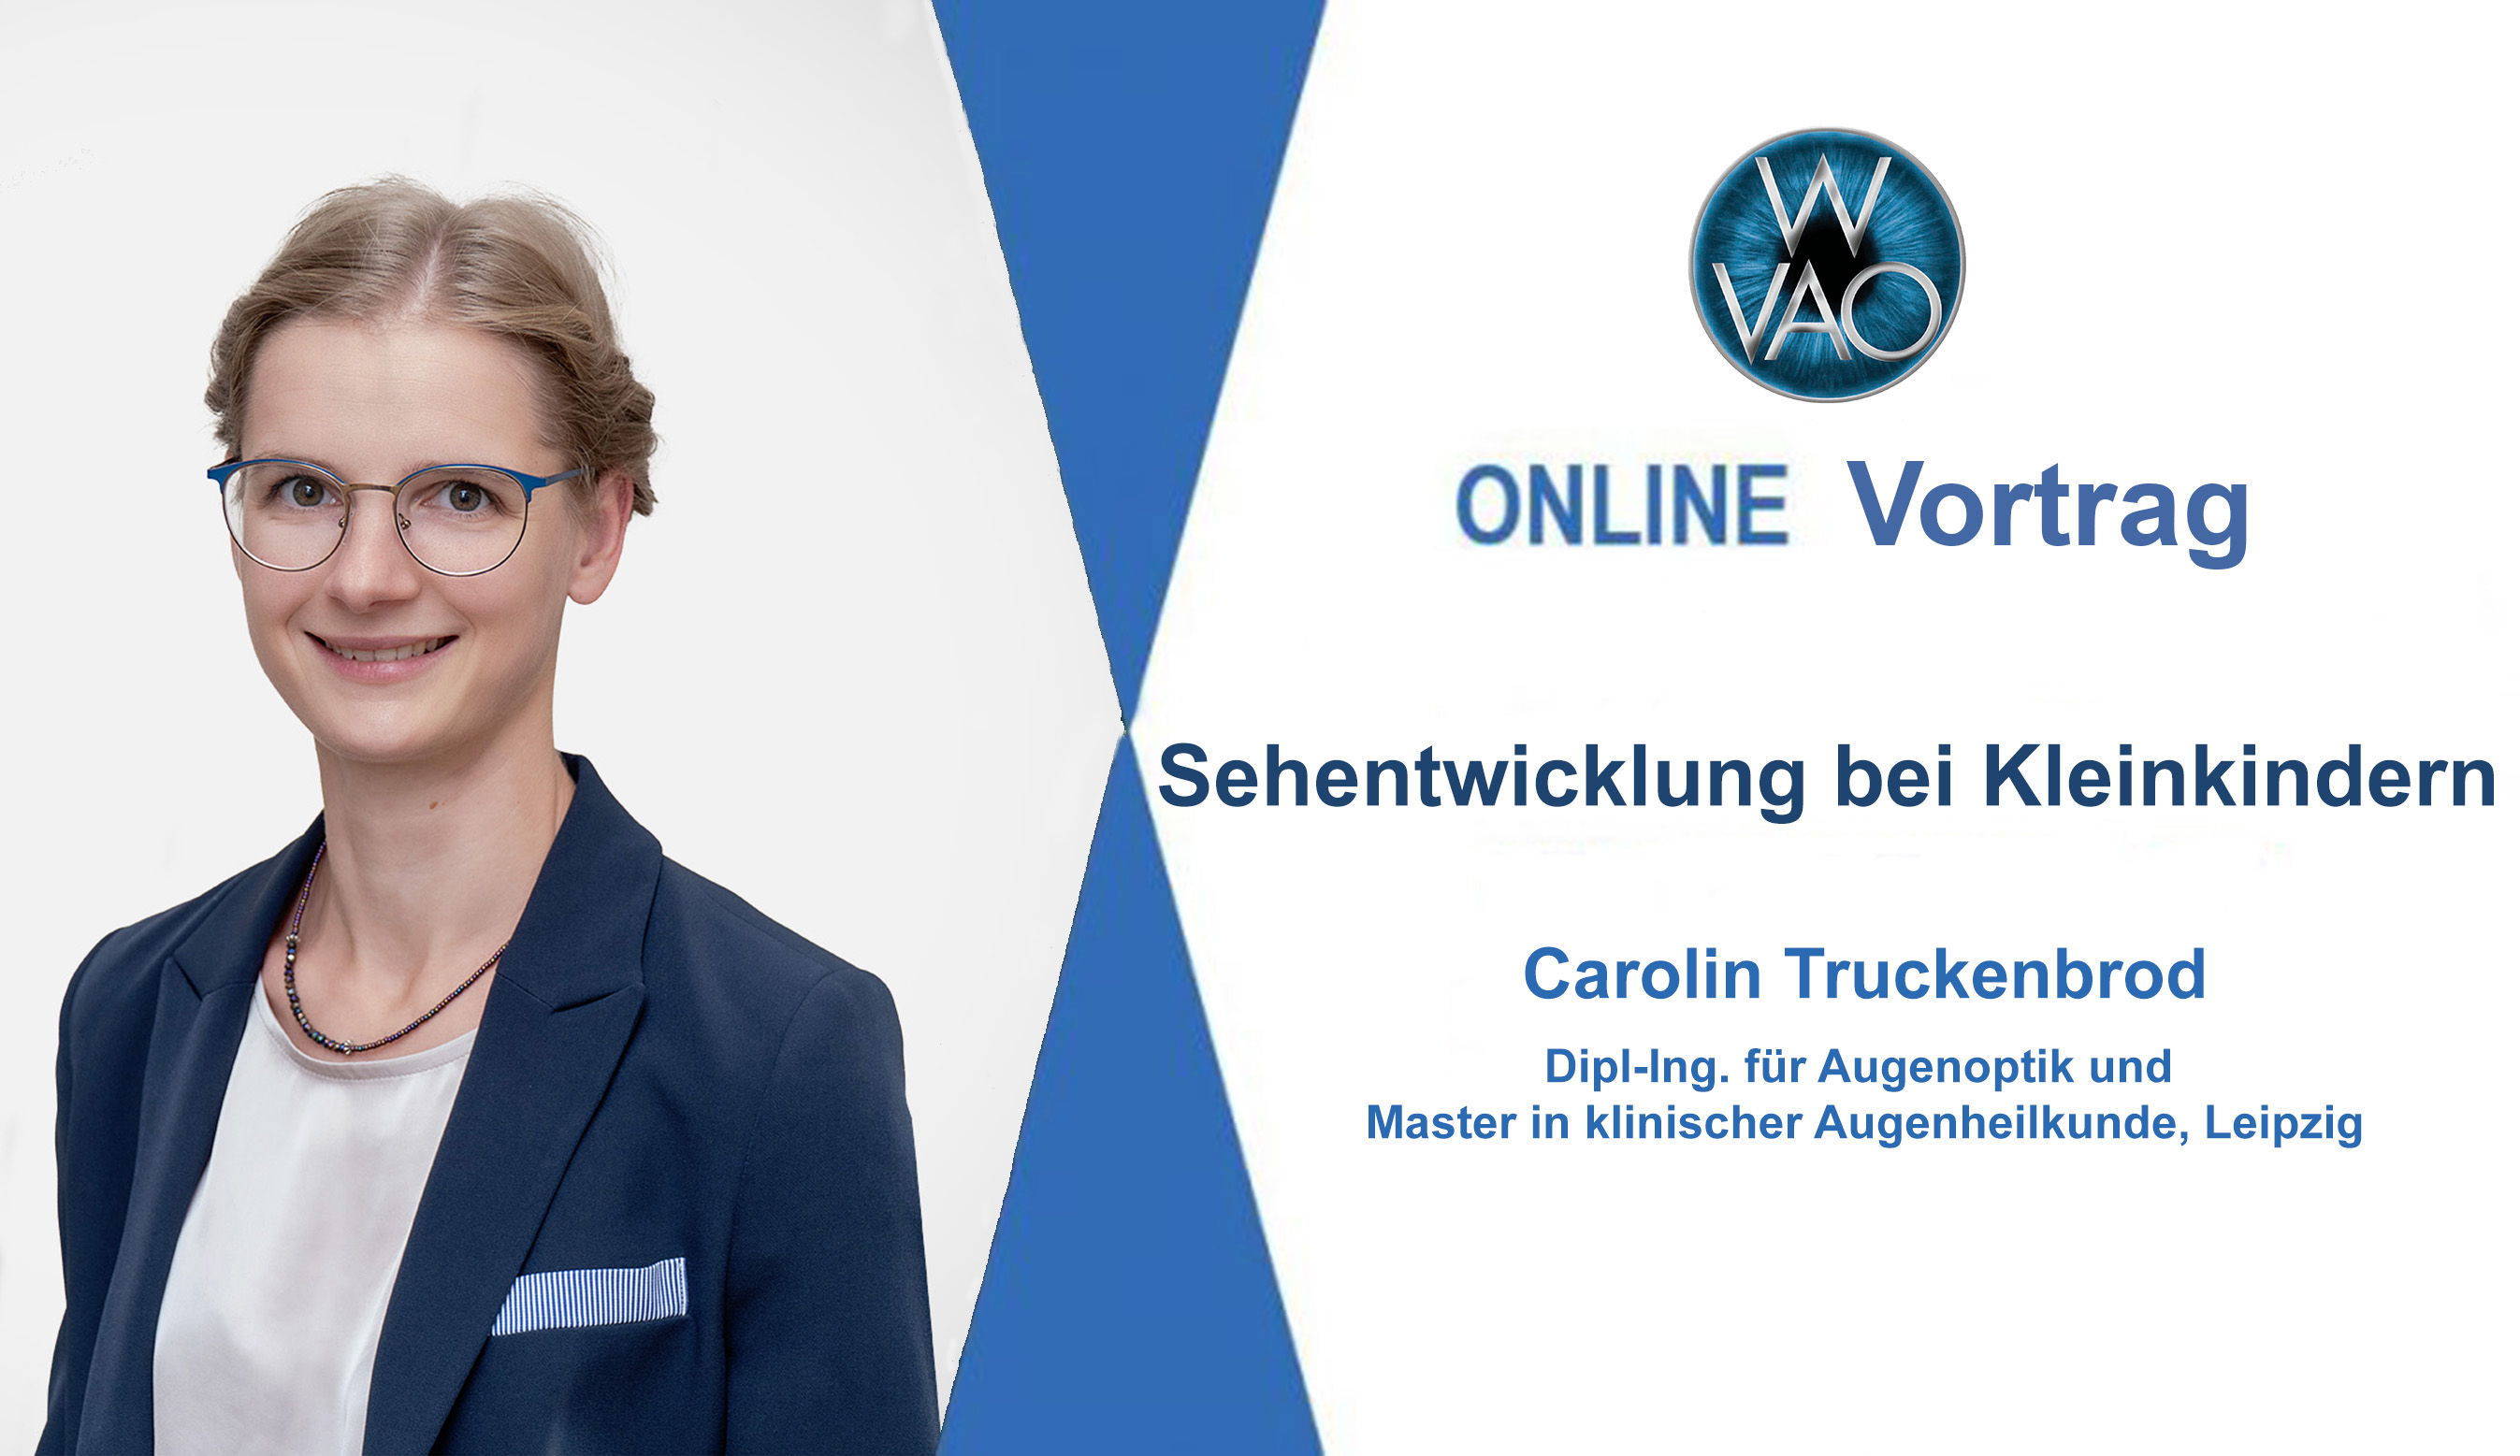 Carolin Trcukenbrod hält Online-Vortrag